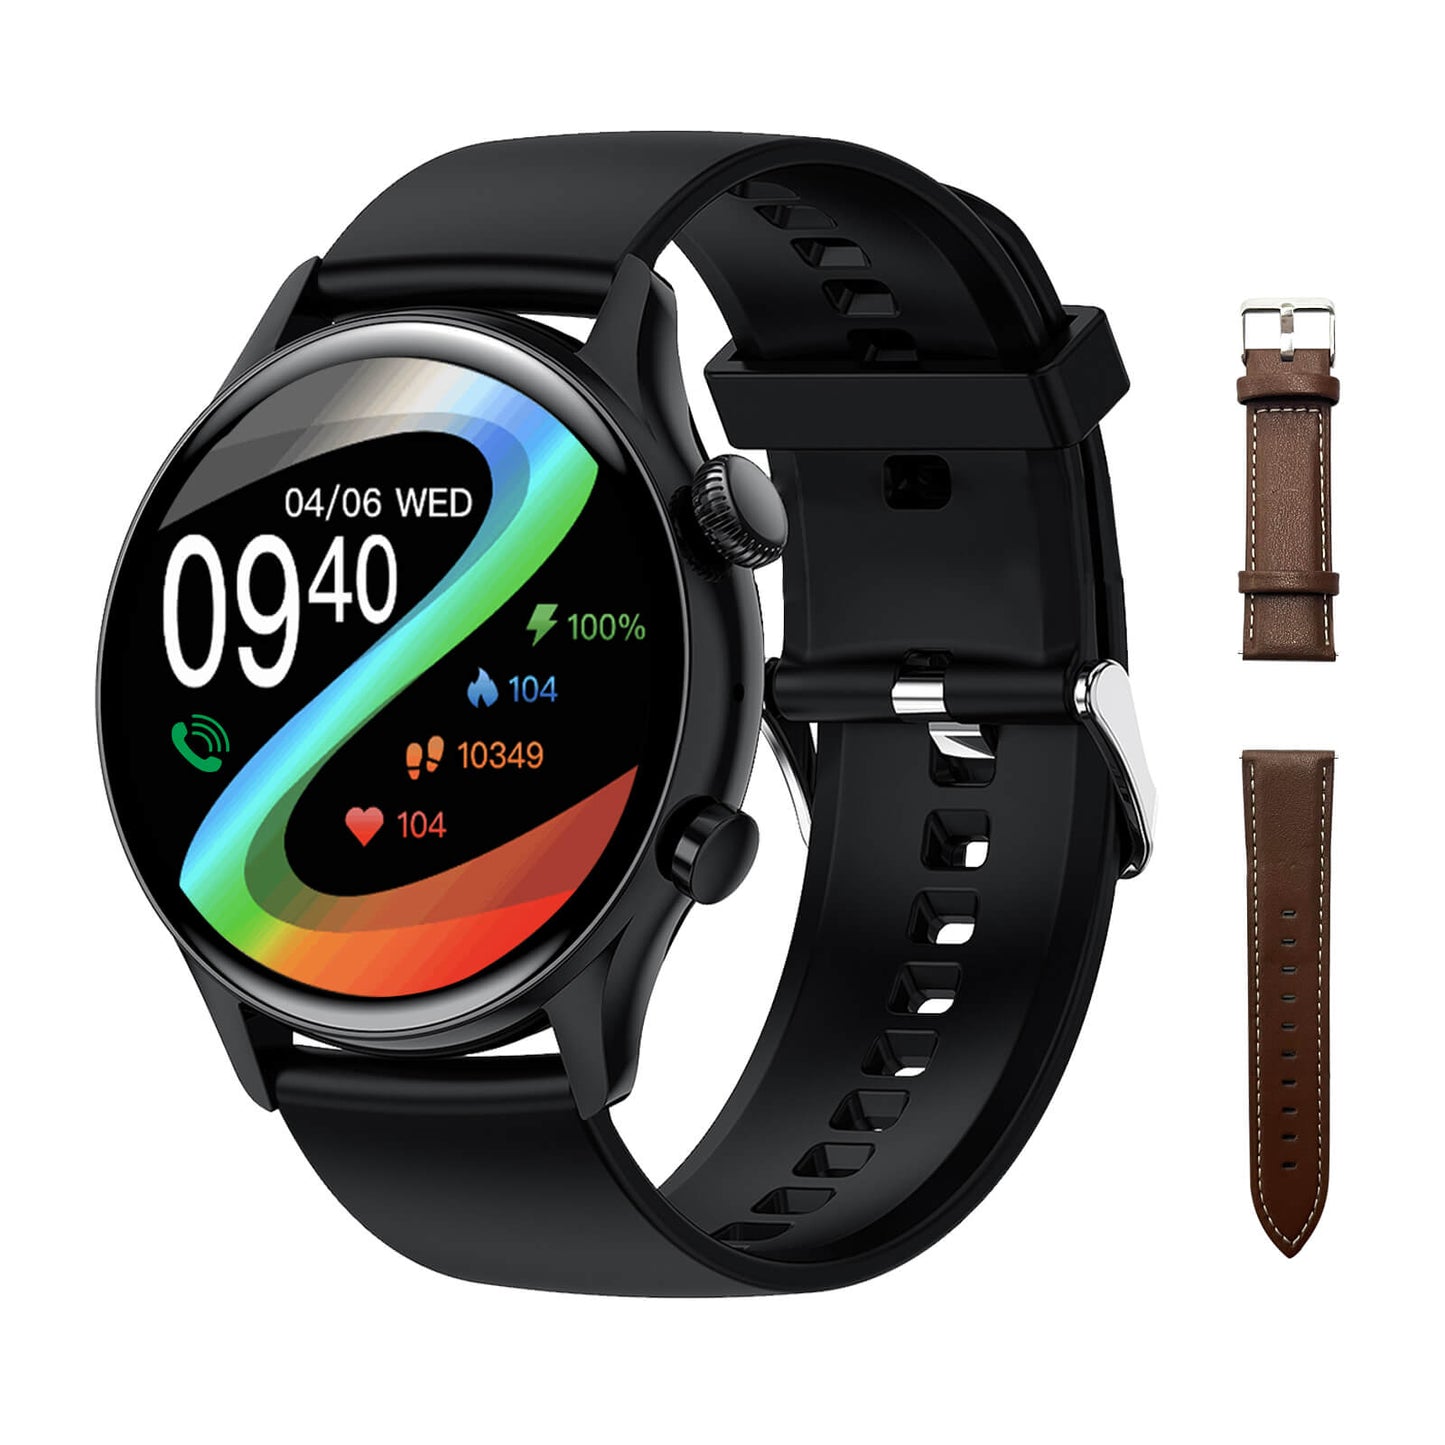 Smart Watch with AMOLED Display